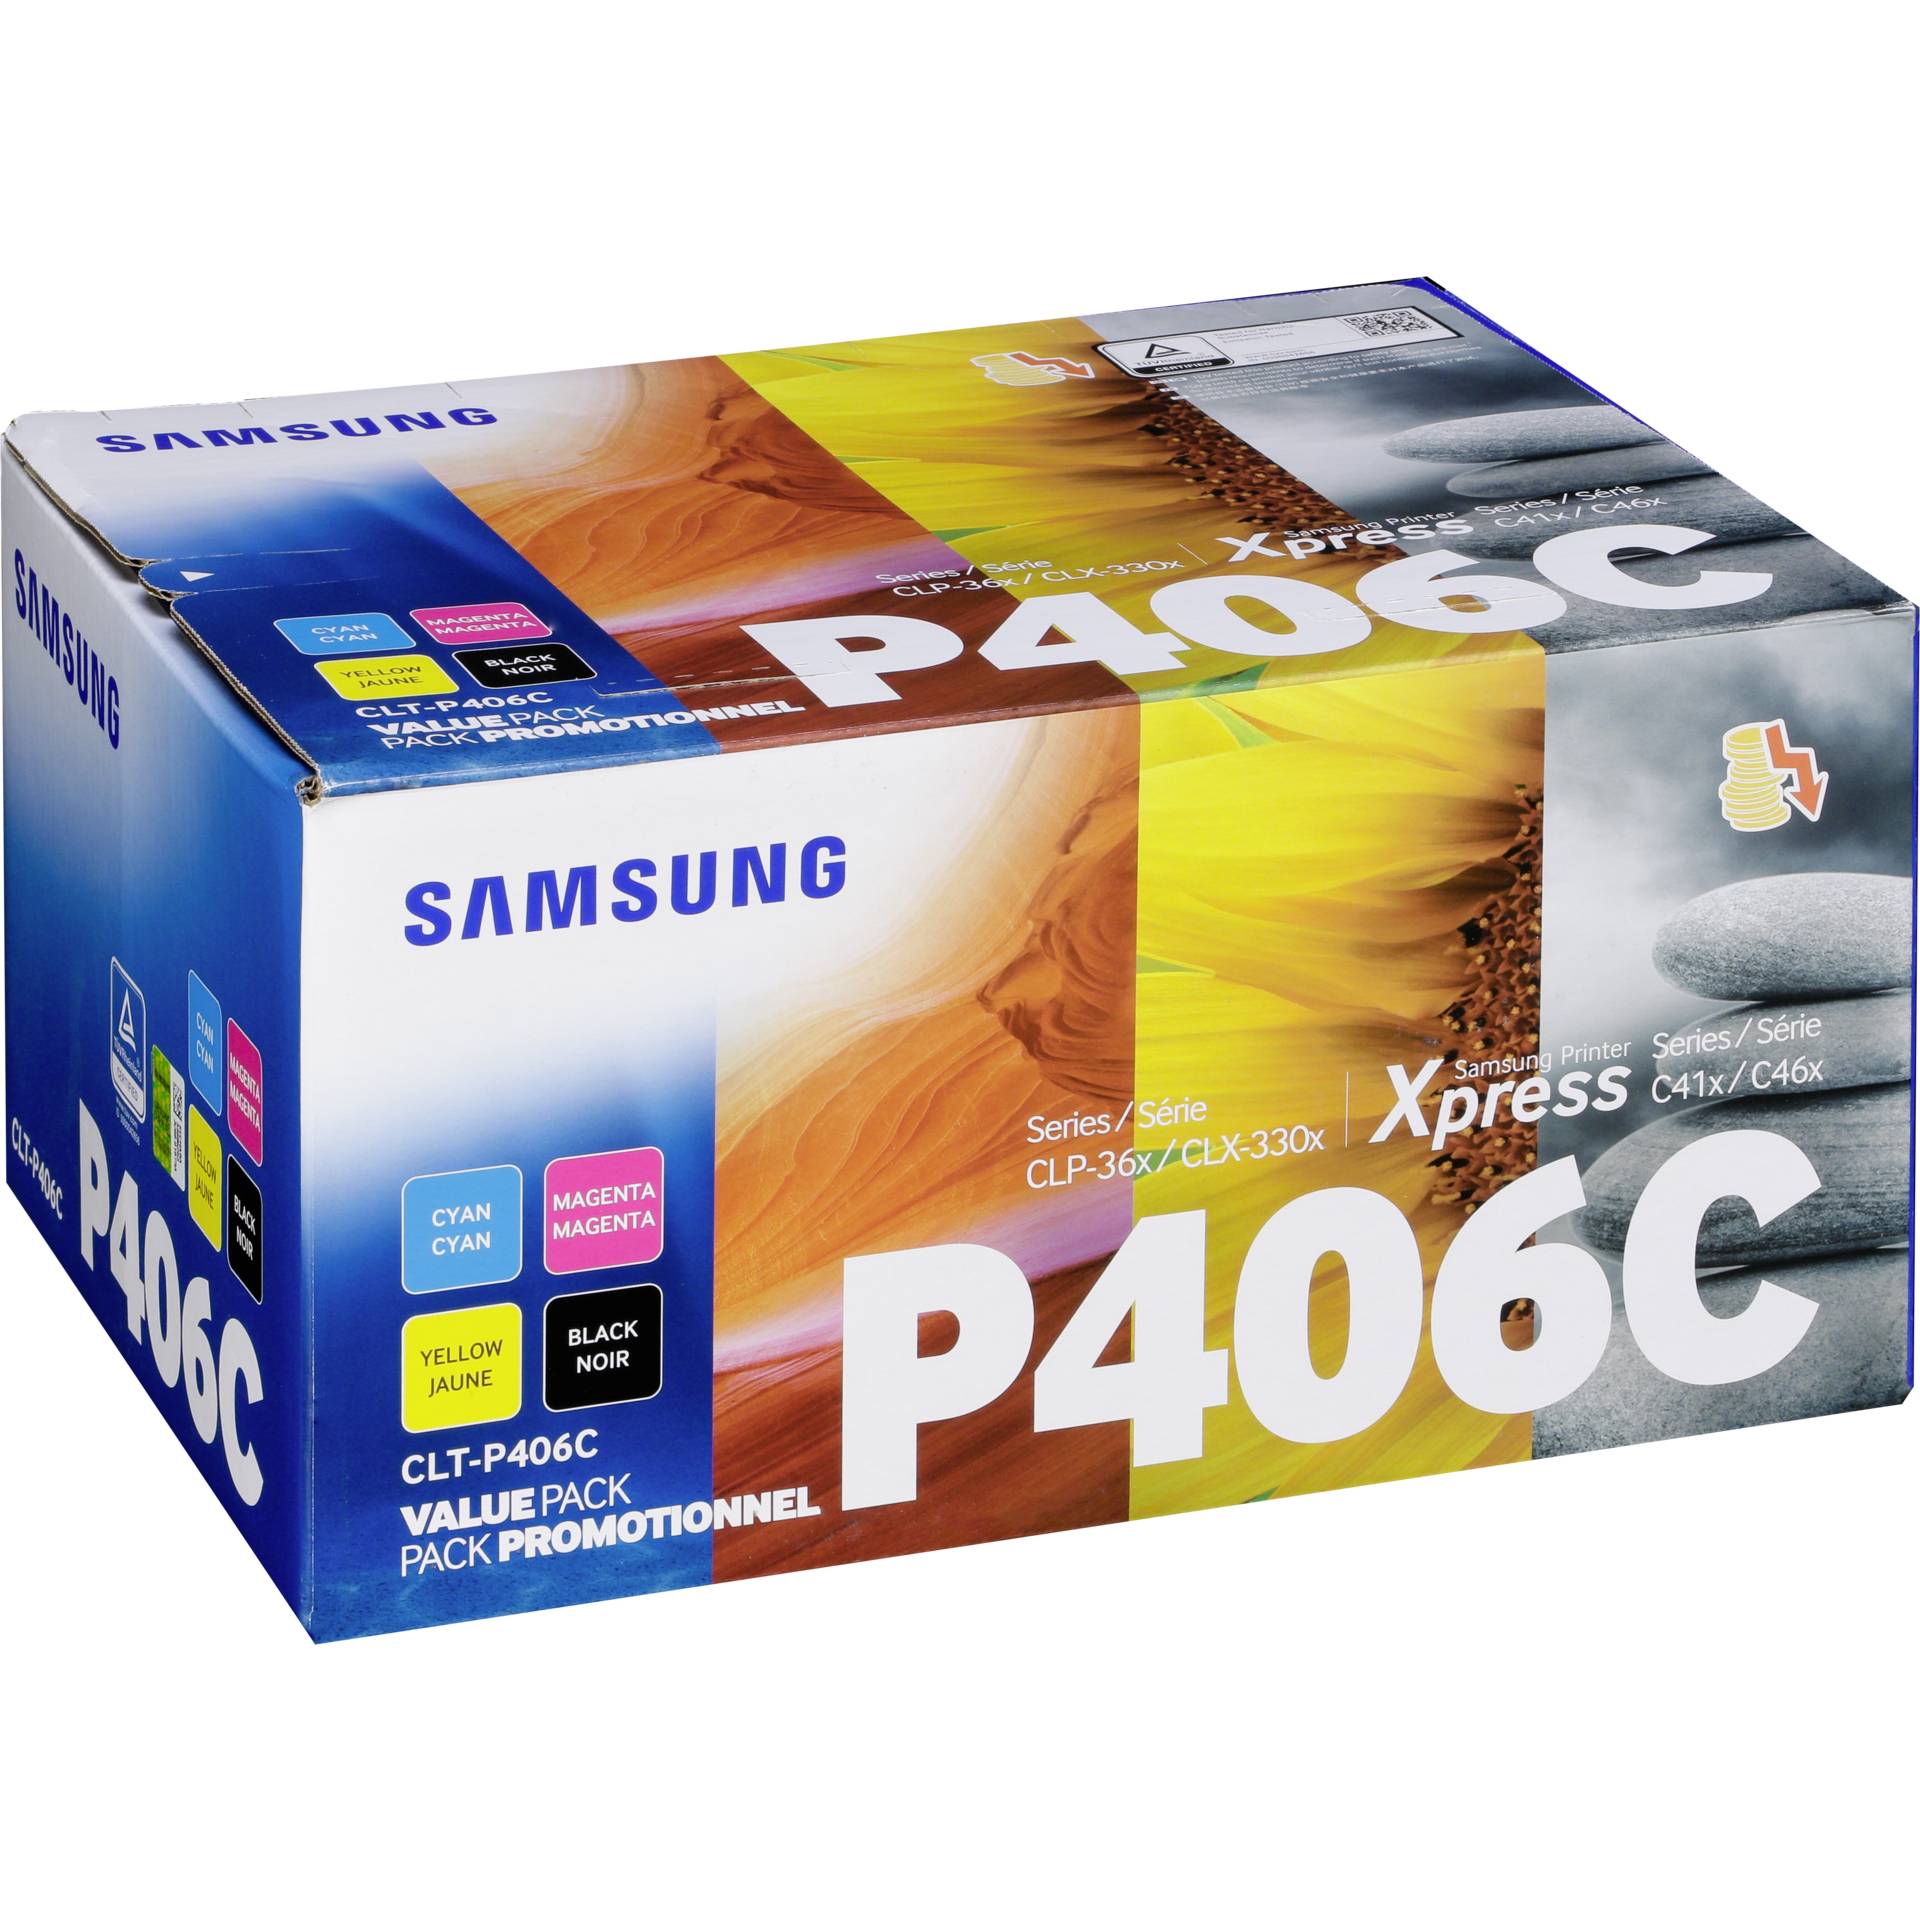 Samsung CLT-P 406 C Value Pack CYMK